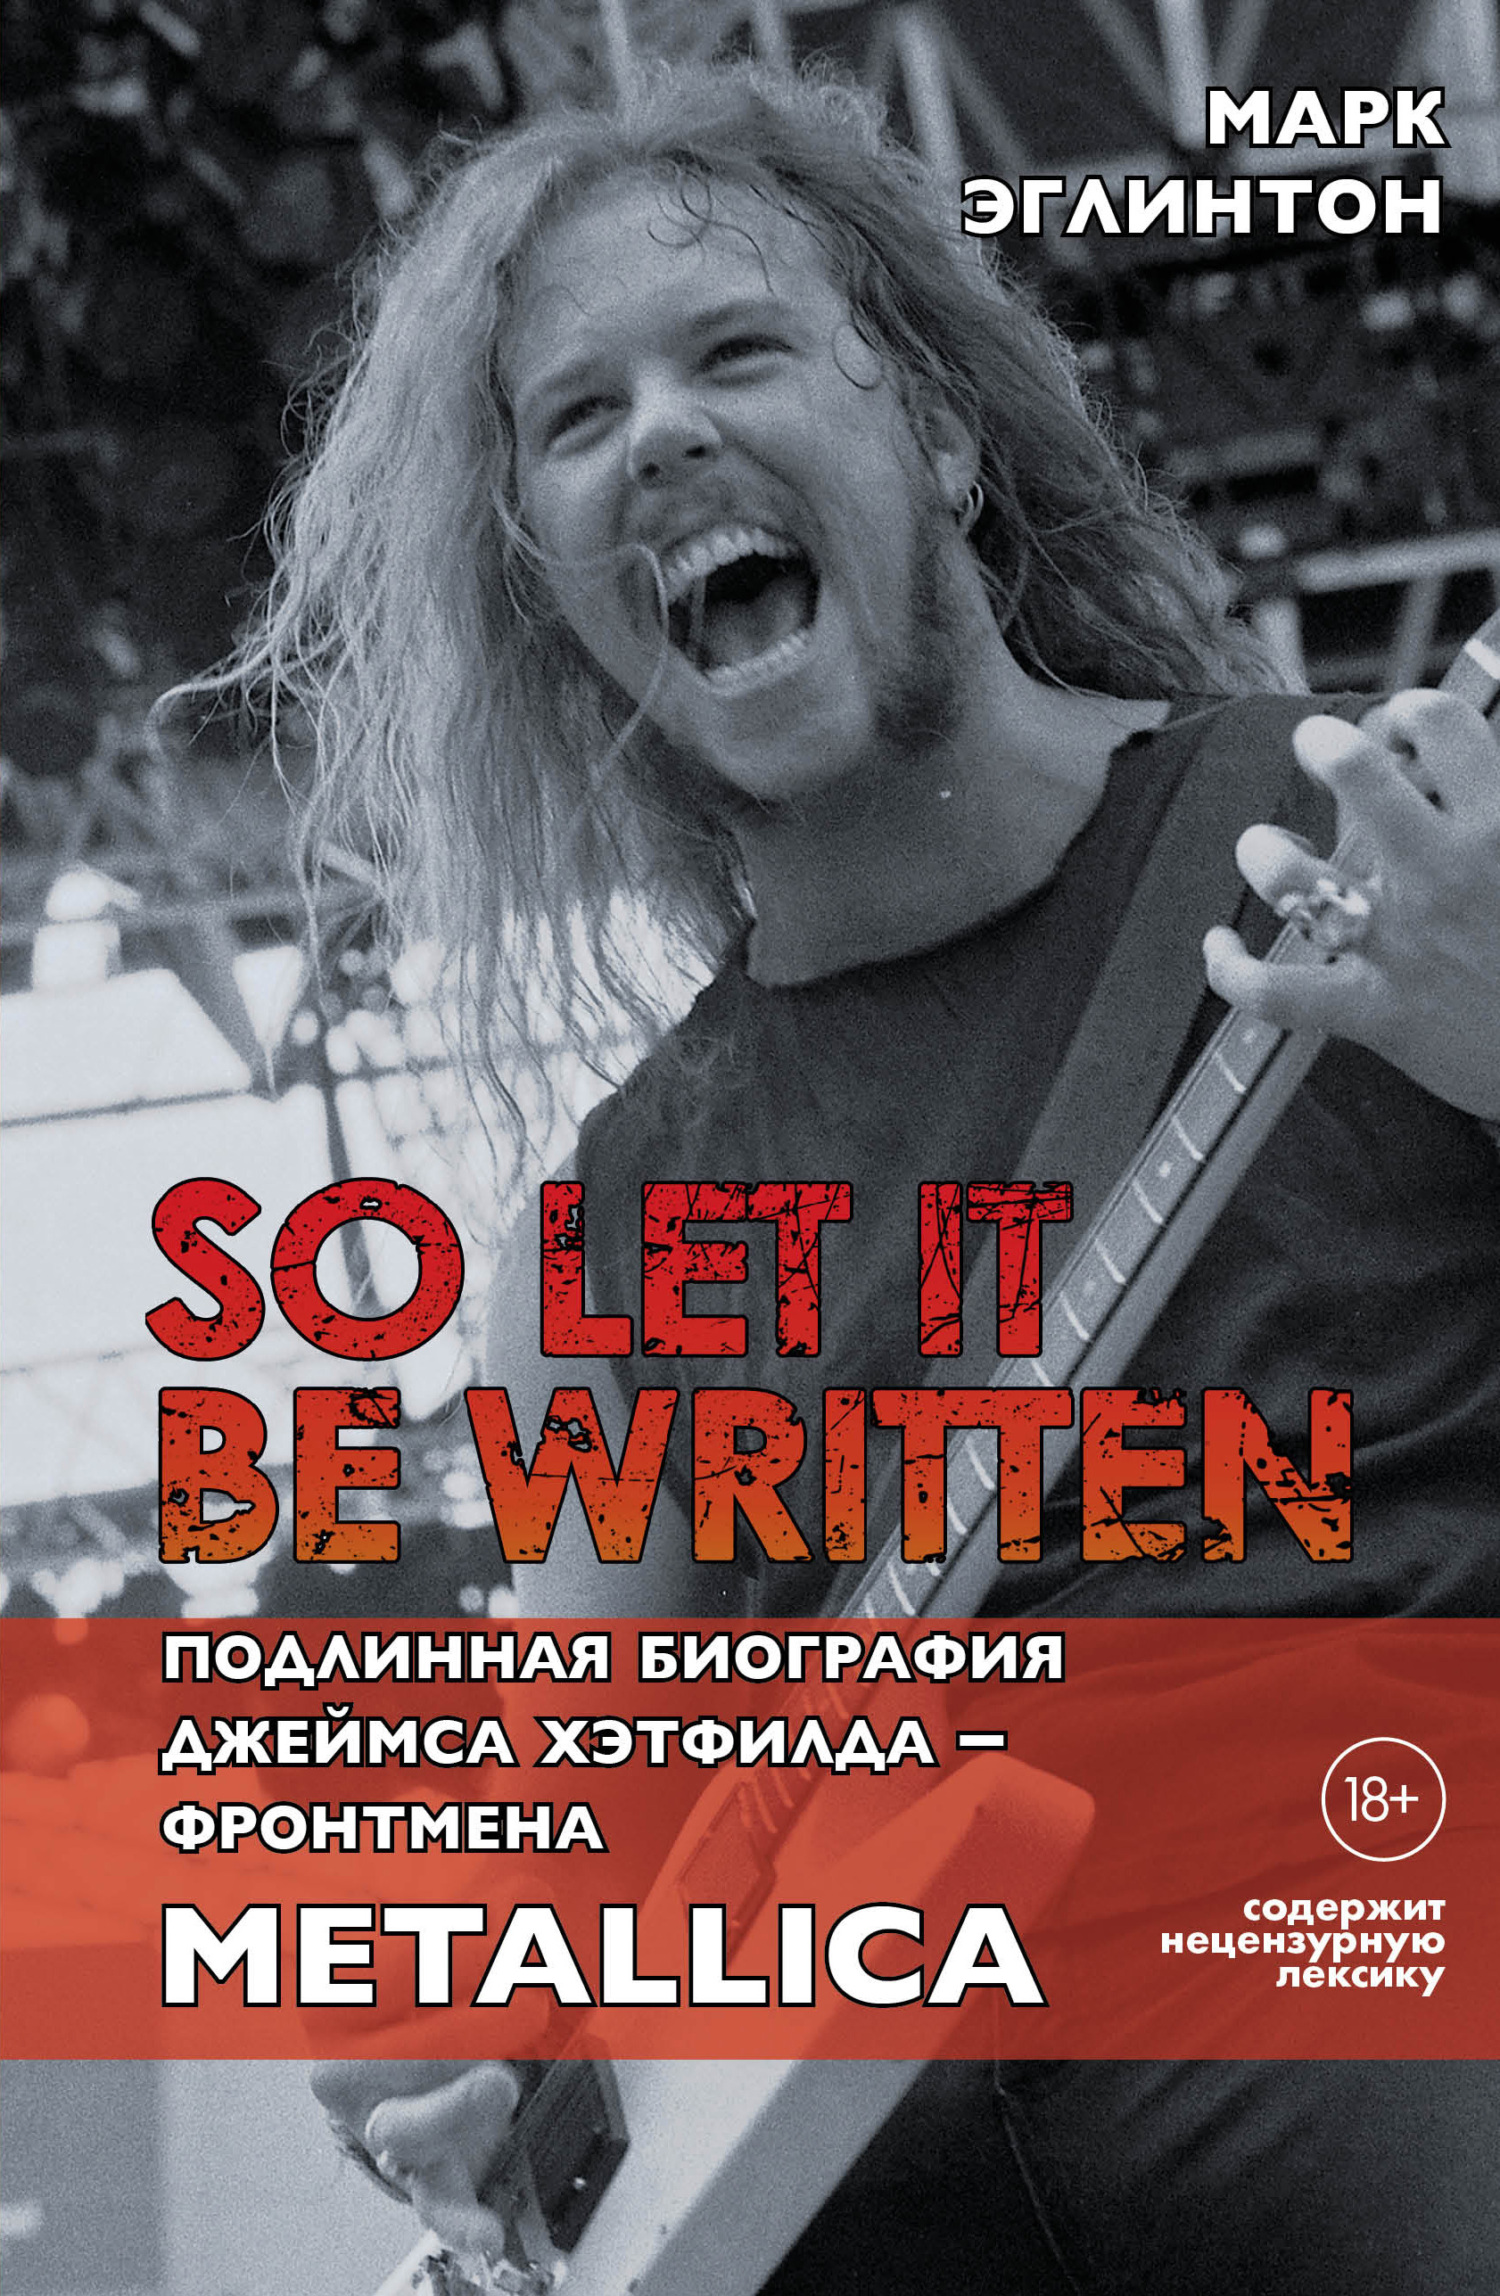 So let it be written: подлинная биография вокалиста Metallica Джеймса Хэтфилда (fb2)